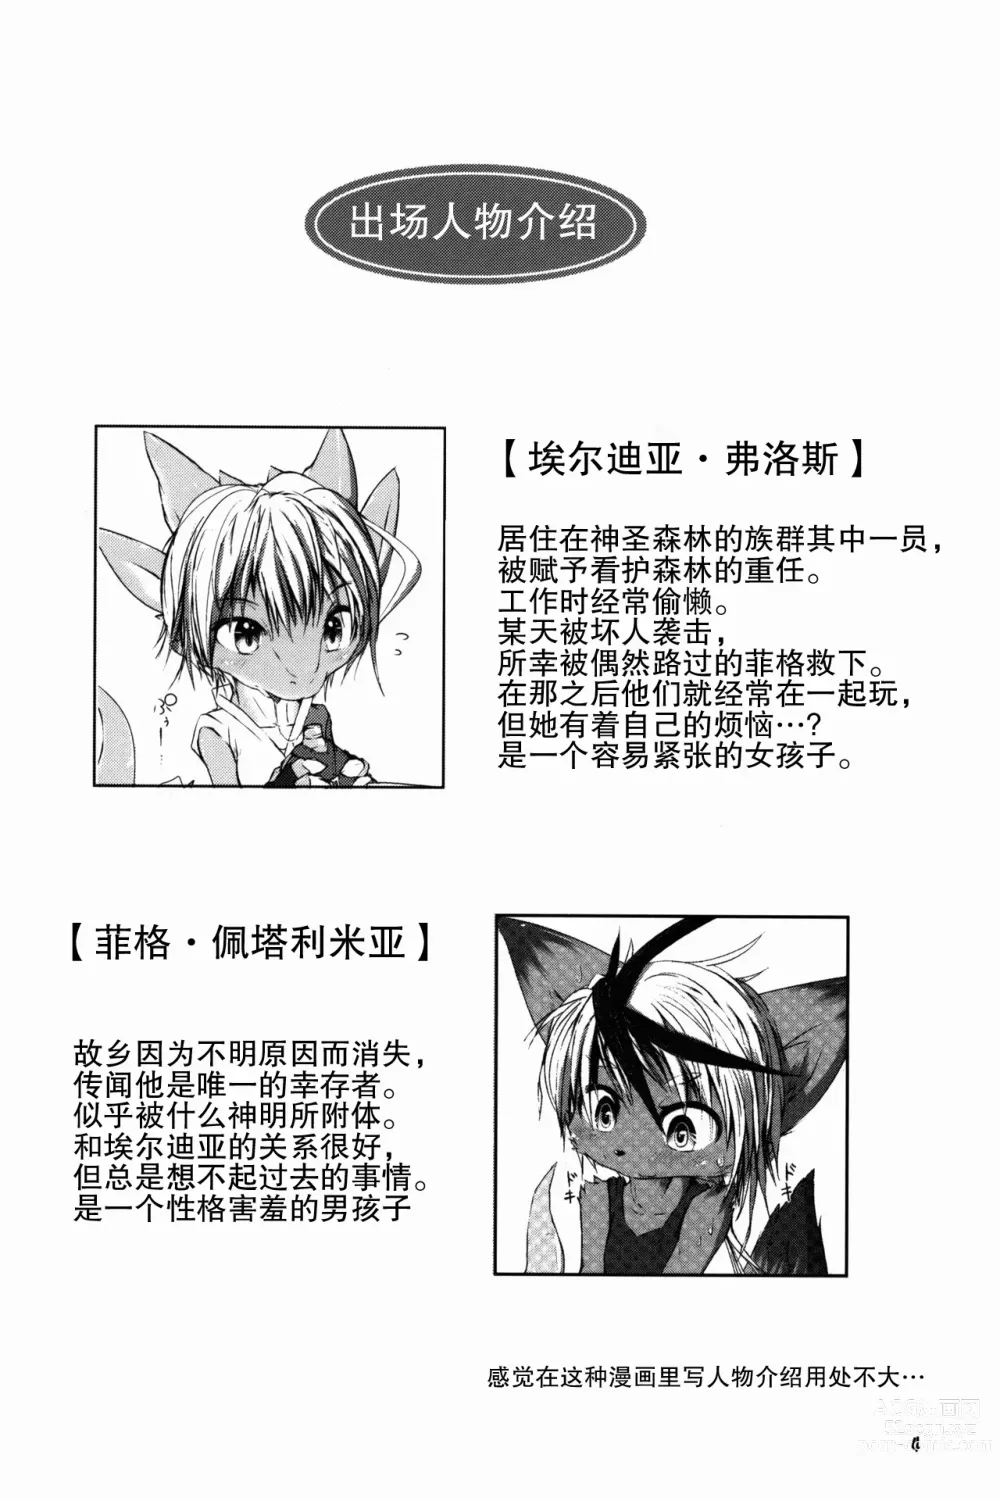 Page 4 of doujinshi SWEETISH GREEN